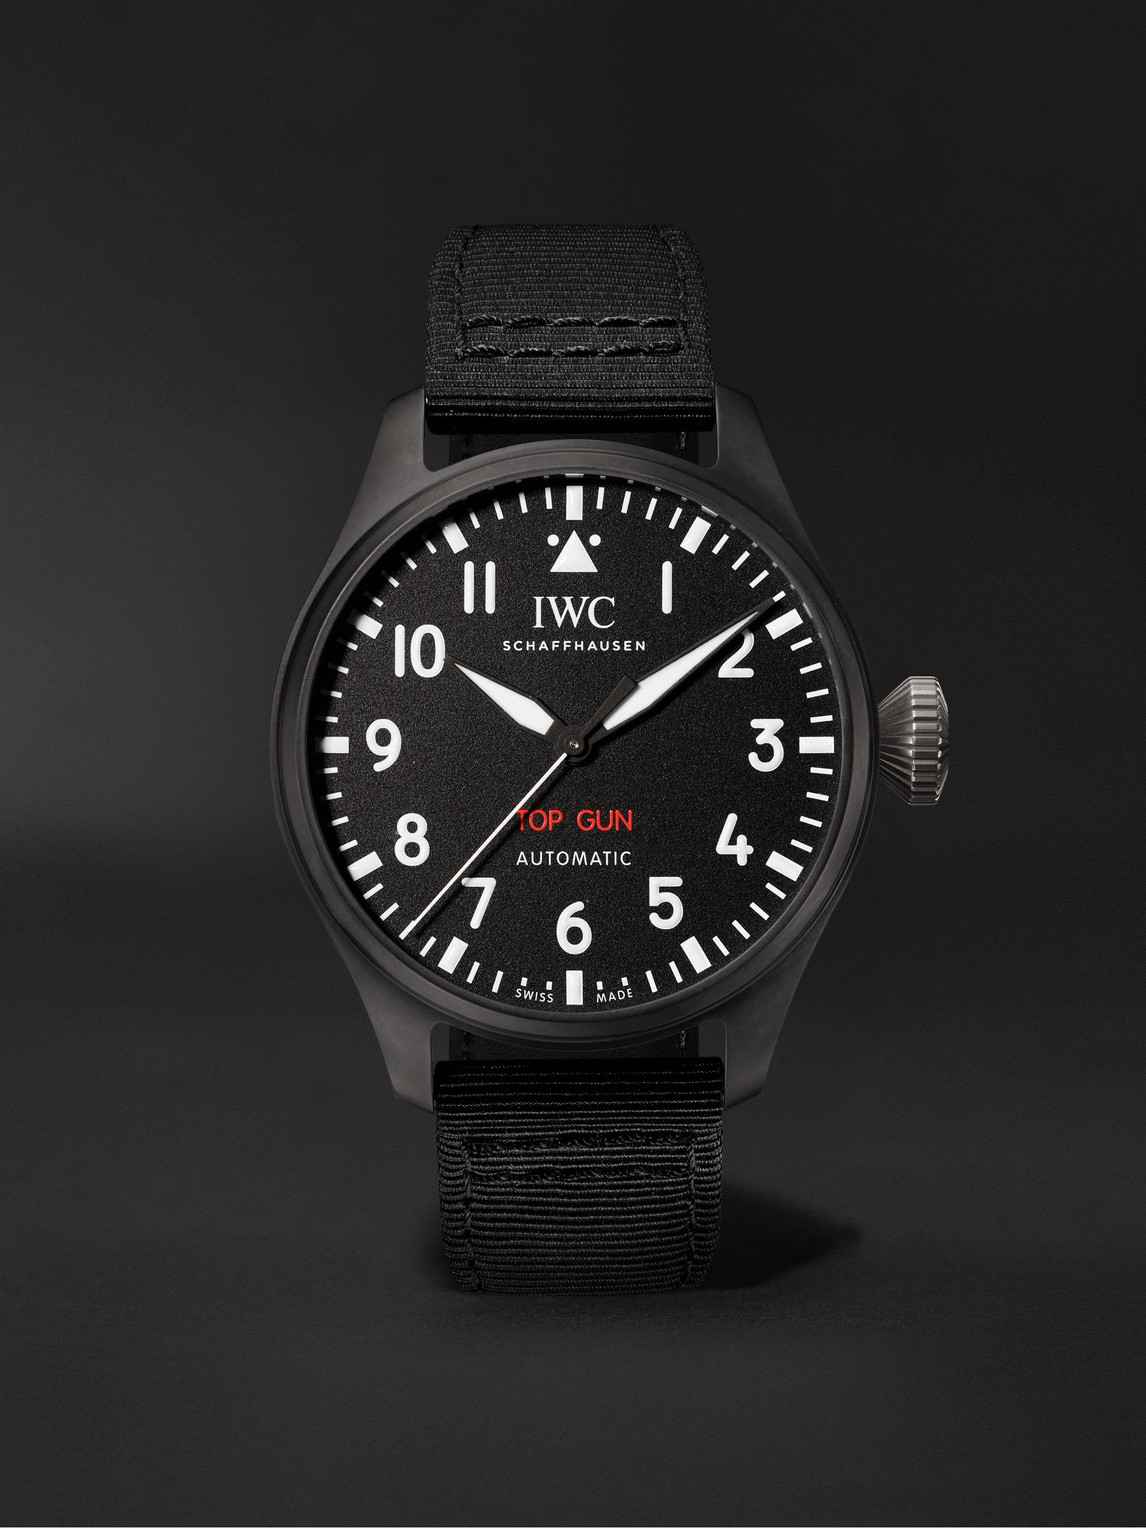 Iwc Schaffhausen Big Pilot's Top Gun Automatic 43.8mm Ceramic And Textile Watch, Ref. No. Iwiw329801 In Black